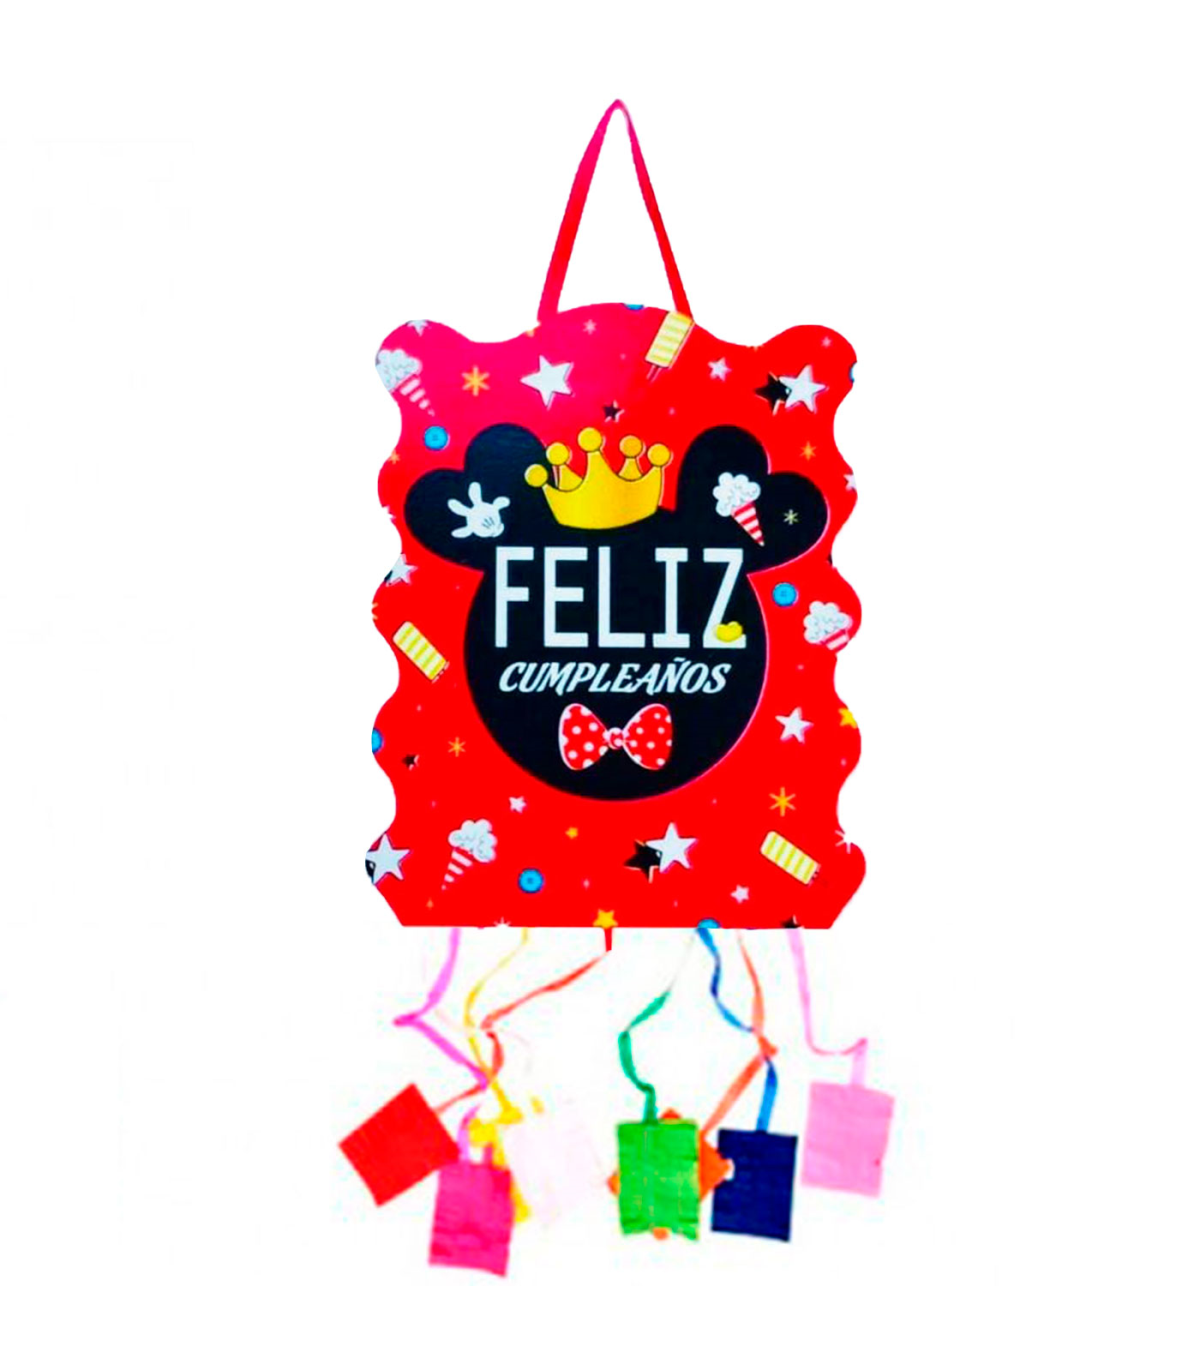 Tradineur - Piñata de mickey para cumpleaños, cartón, para rellenar con  golosinas, chuches, niños, decoración infantil para fies